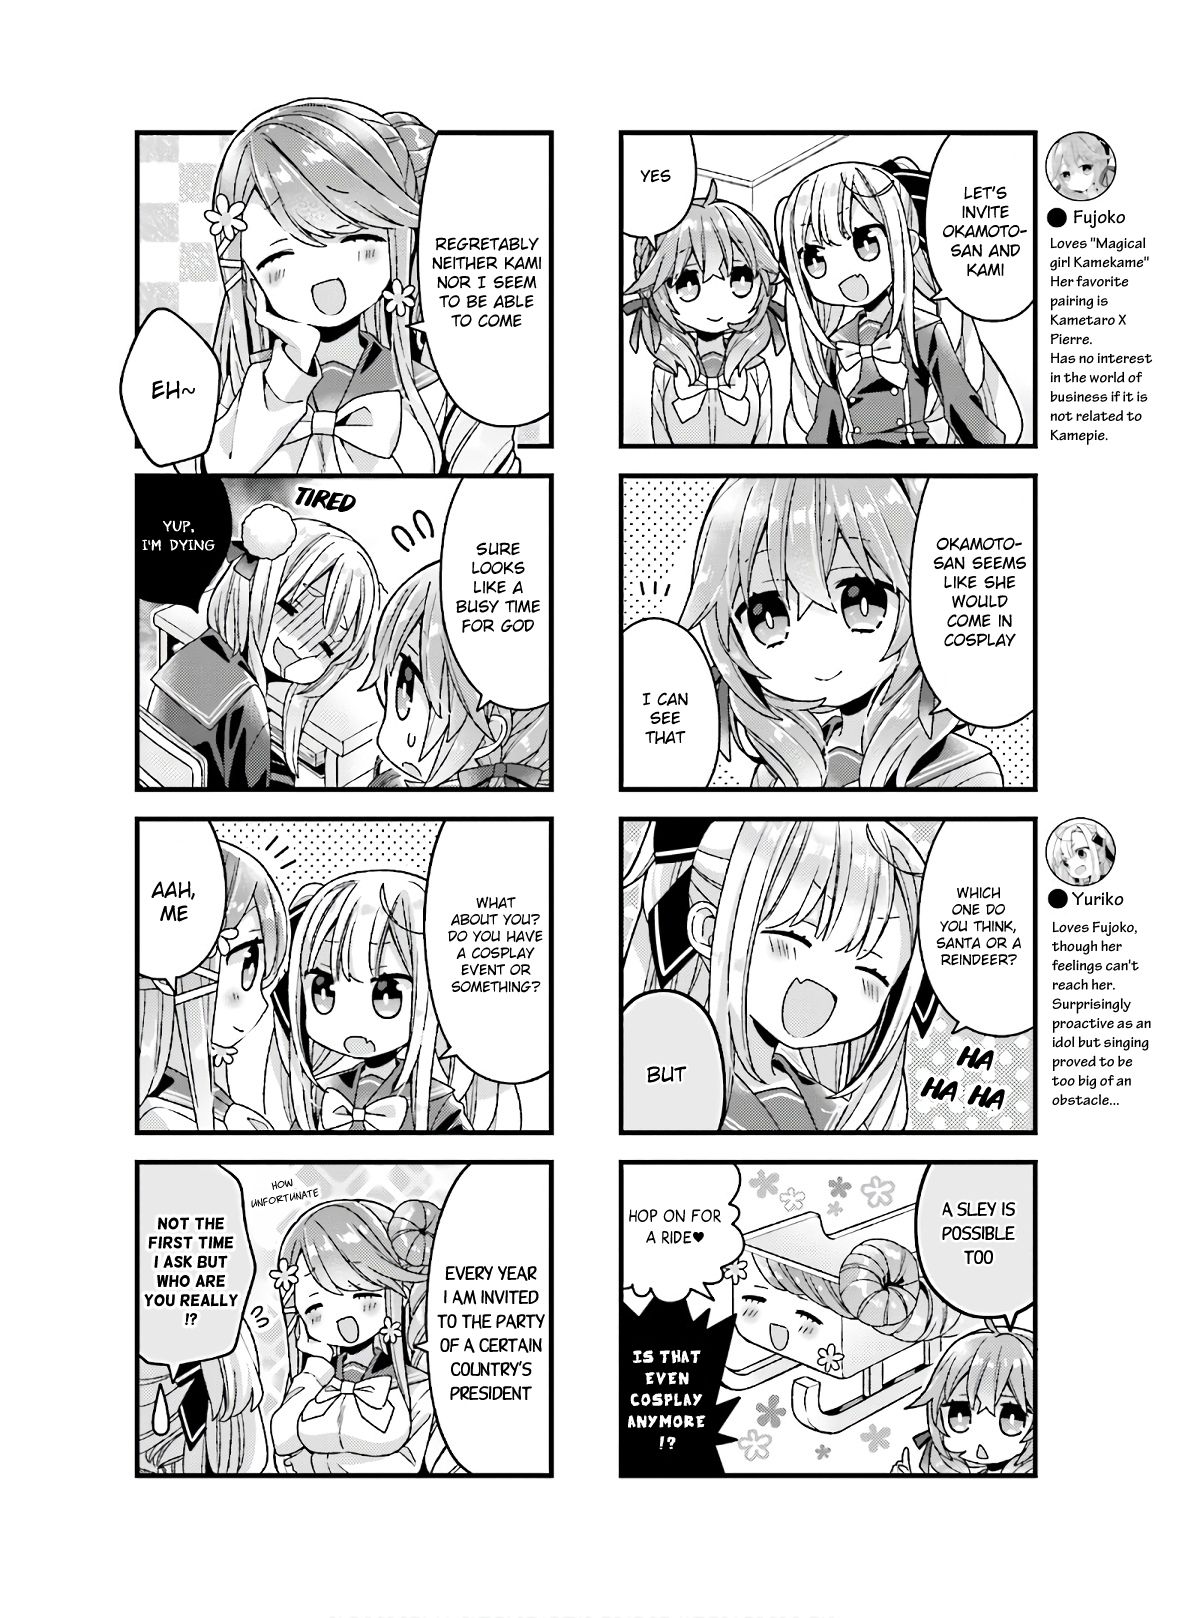 Fujoko to Yuriko - chapter 22 - #2